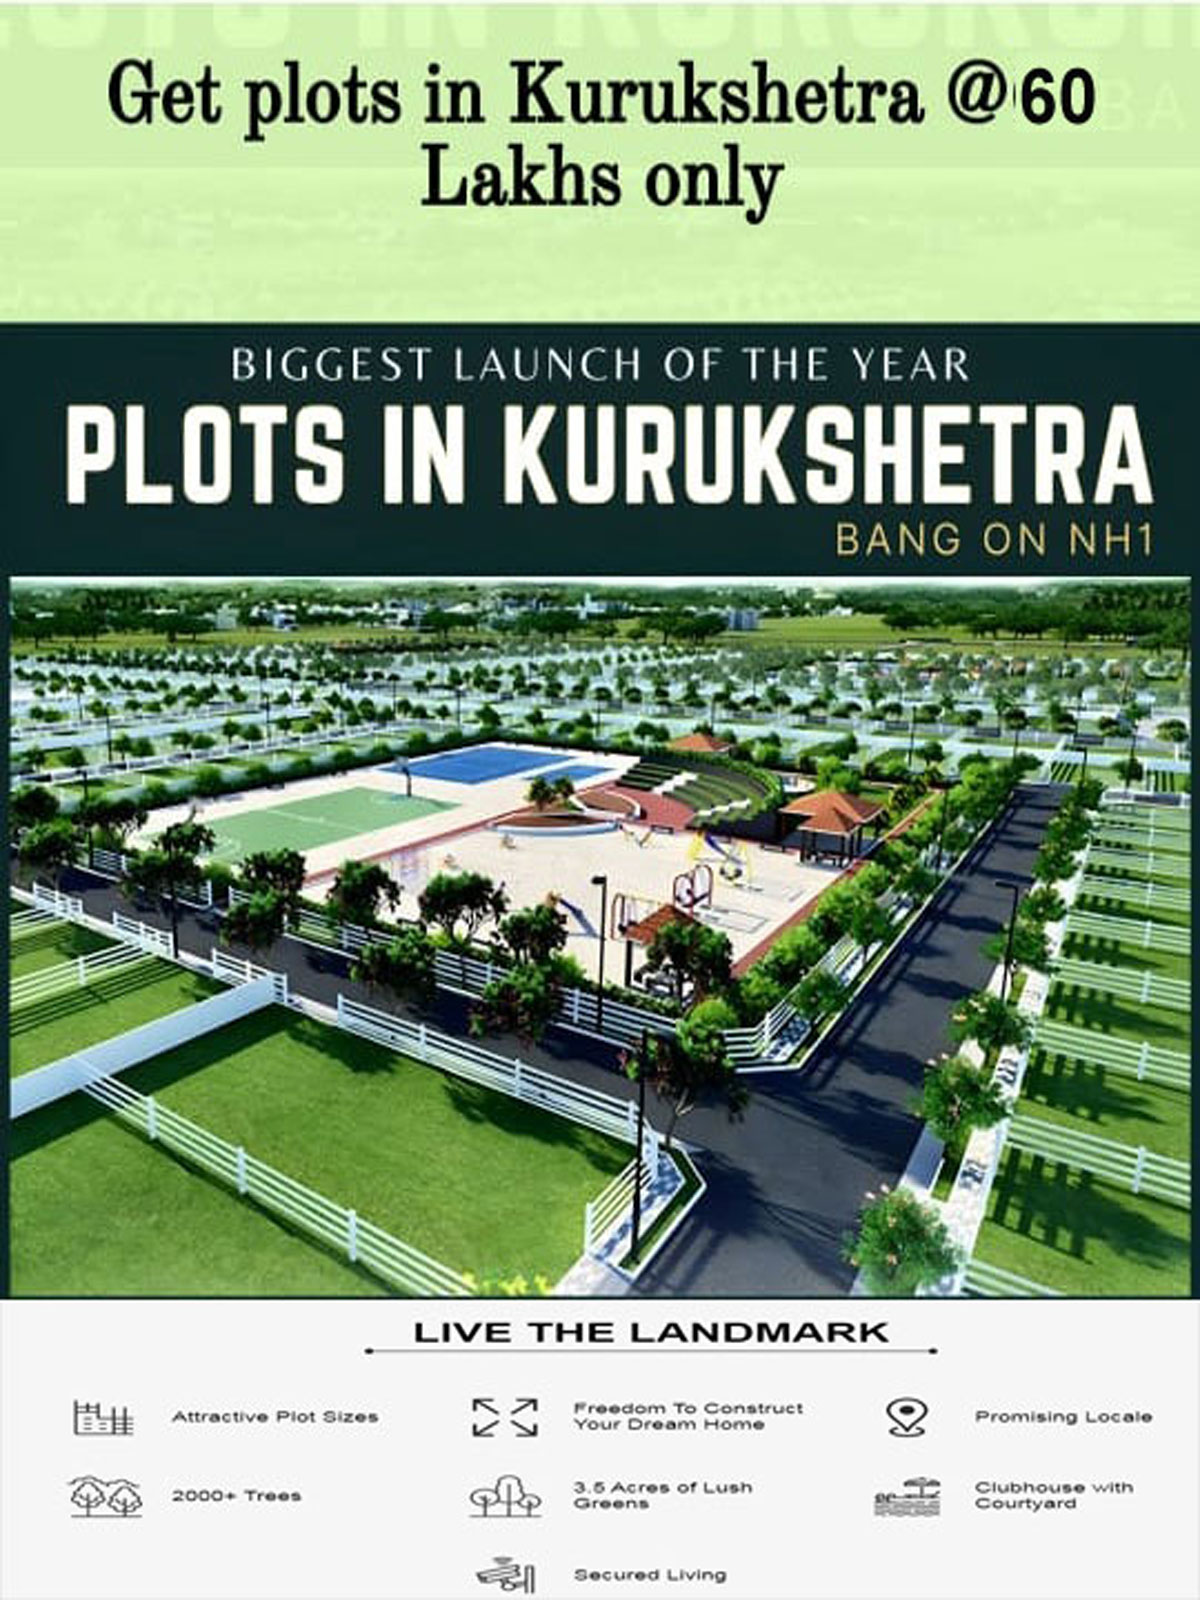 Godrej Plots Kurukshetra: An Plots Overview